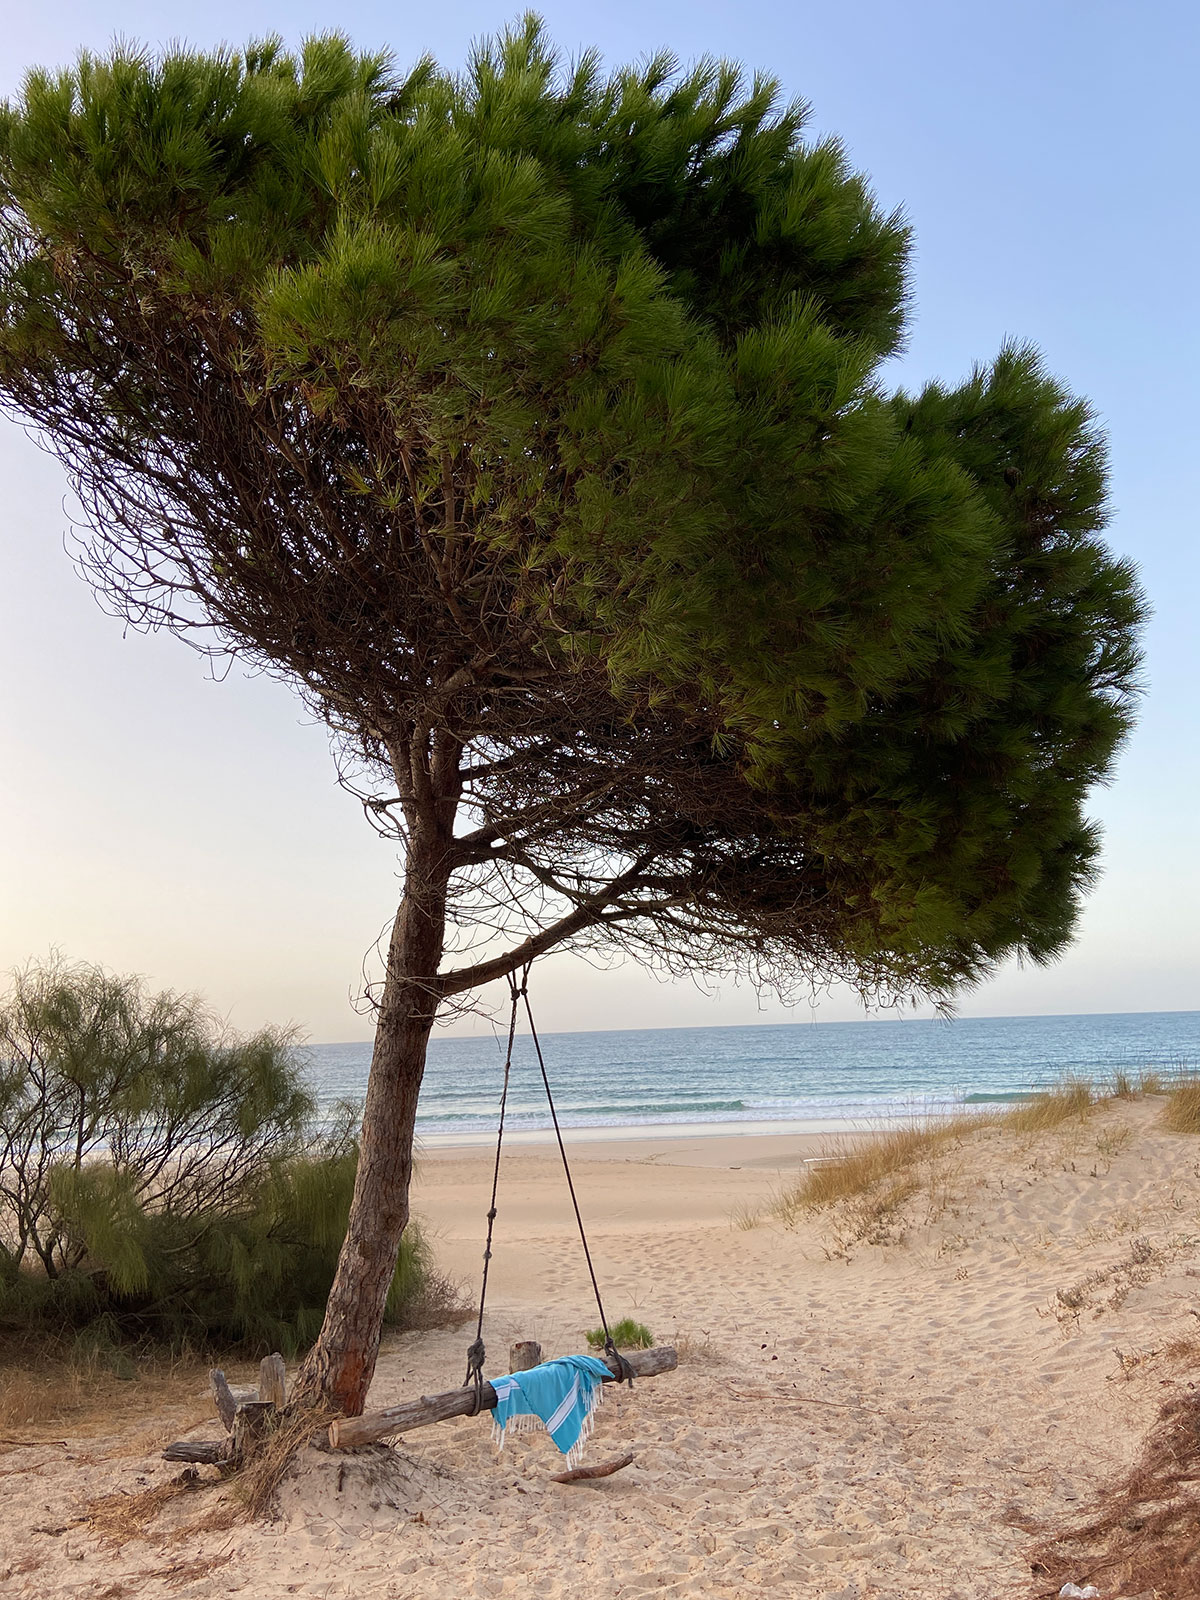 Pine tree, swing, beach and sea